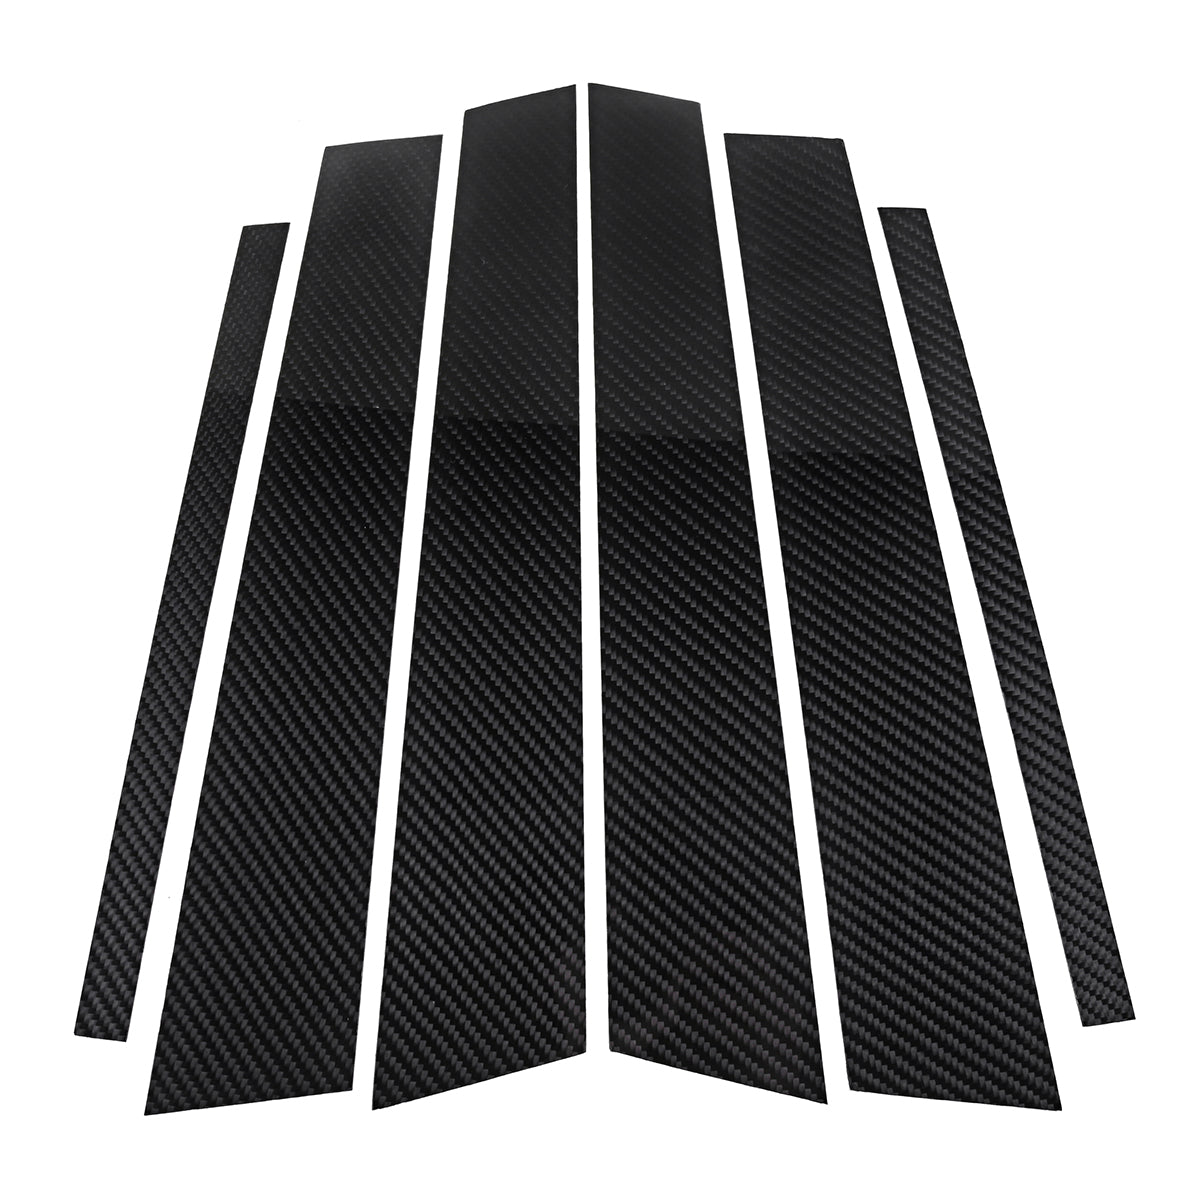 Black Carbon Fiber Car Window B-pillars Molding Trim Car Styling Stickers for BMW 3 5 Series